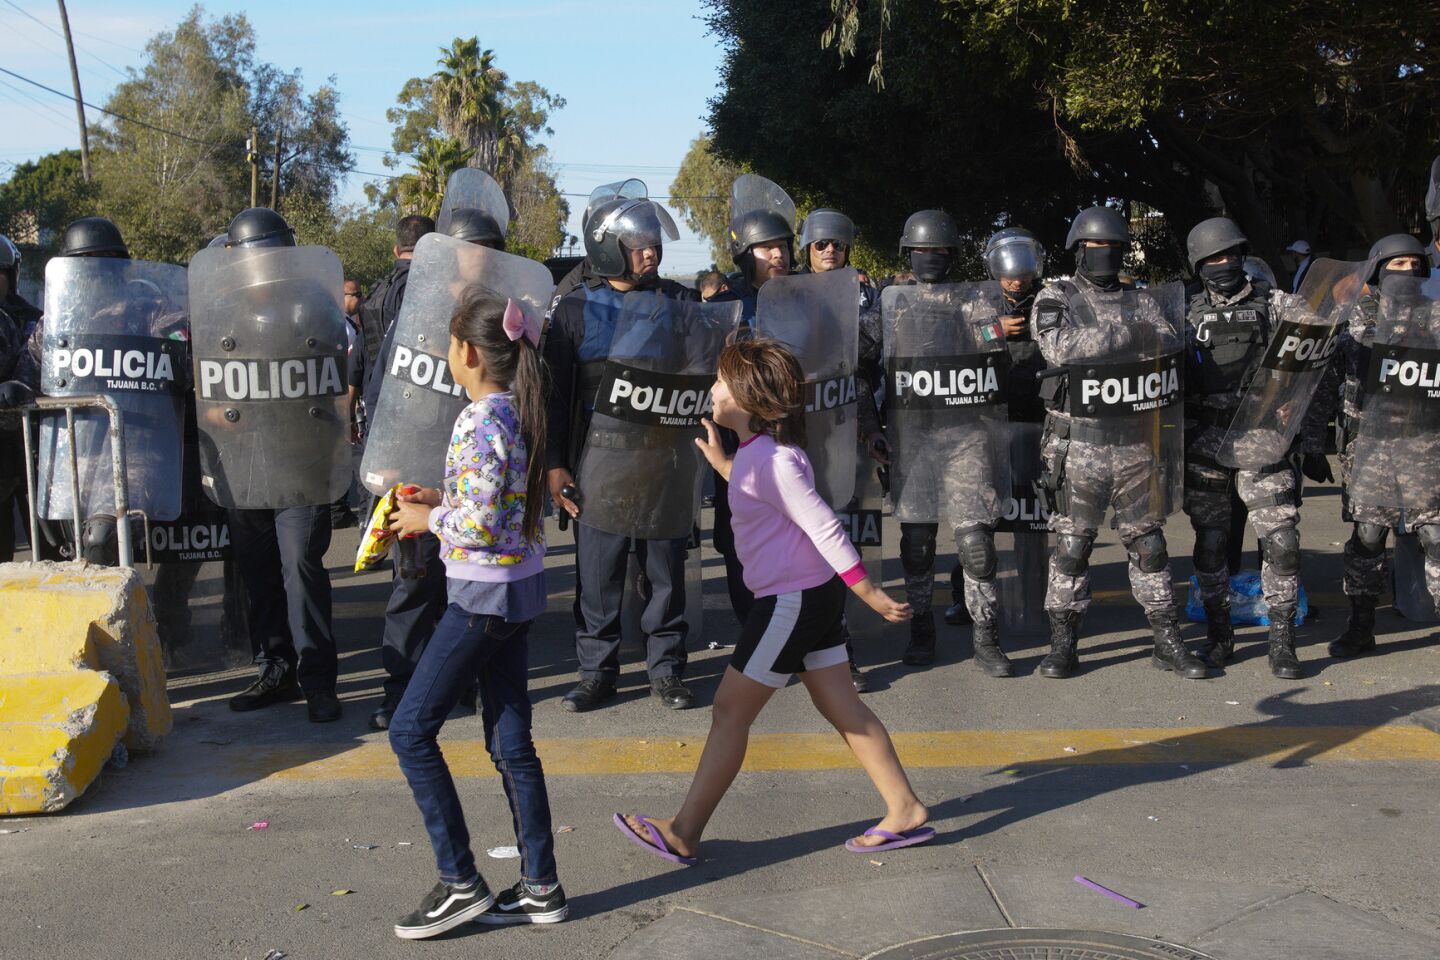 Anti-caravan protest starts peaceful, turns tense outside Tijuana shelter